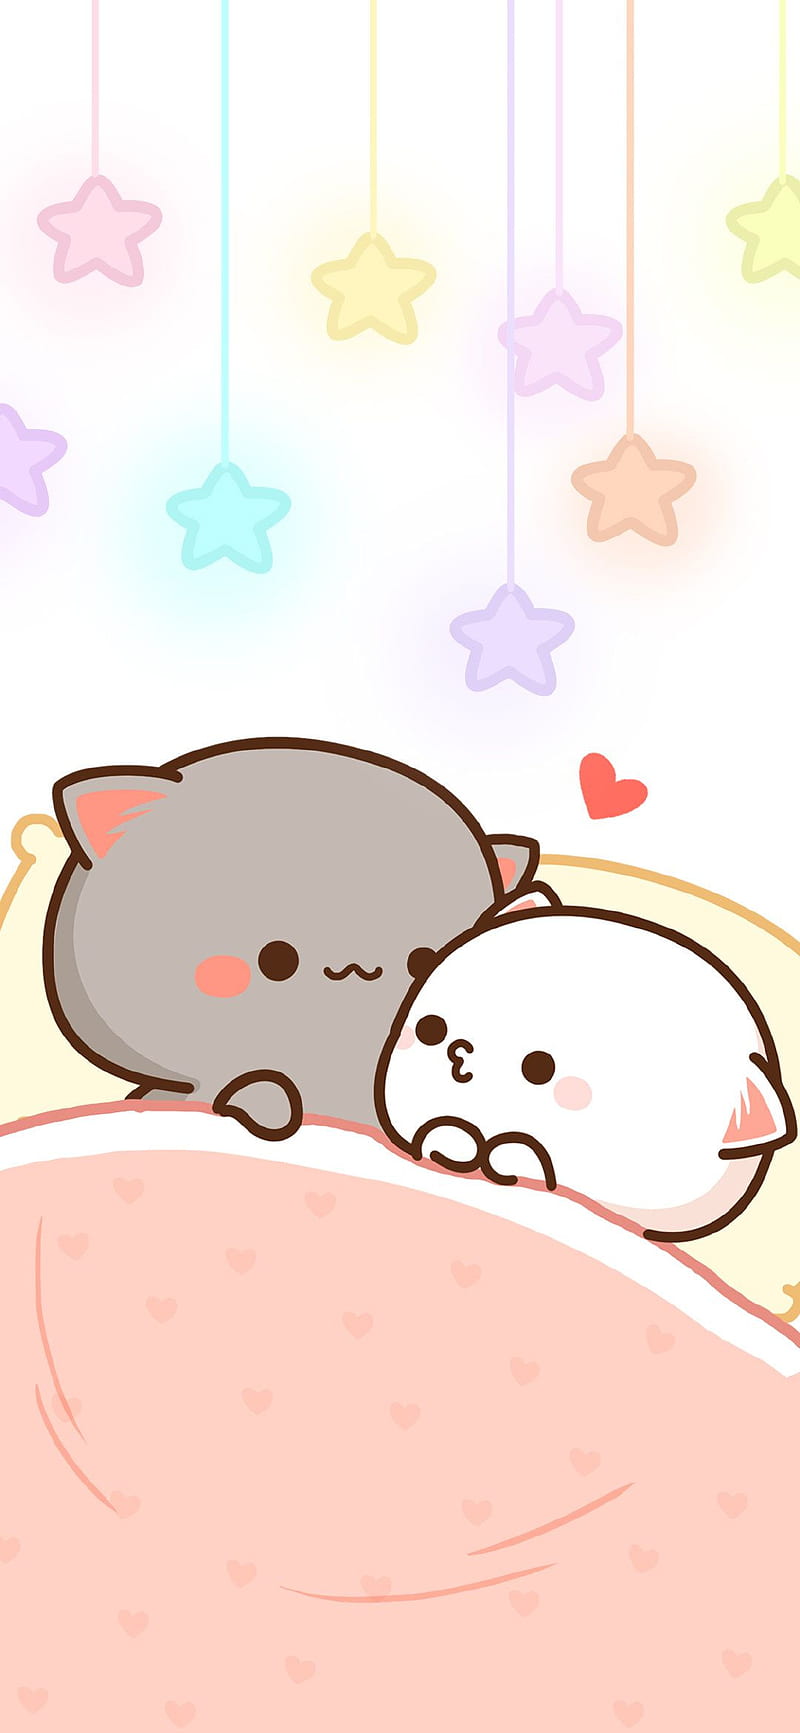 https://w0.peakpx.com/wallpaper/369/23/HD-wallpaper-cute-uwu-cat-kawaii-kitty-love.jpg